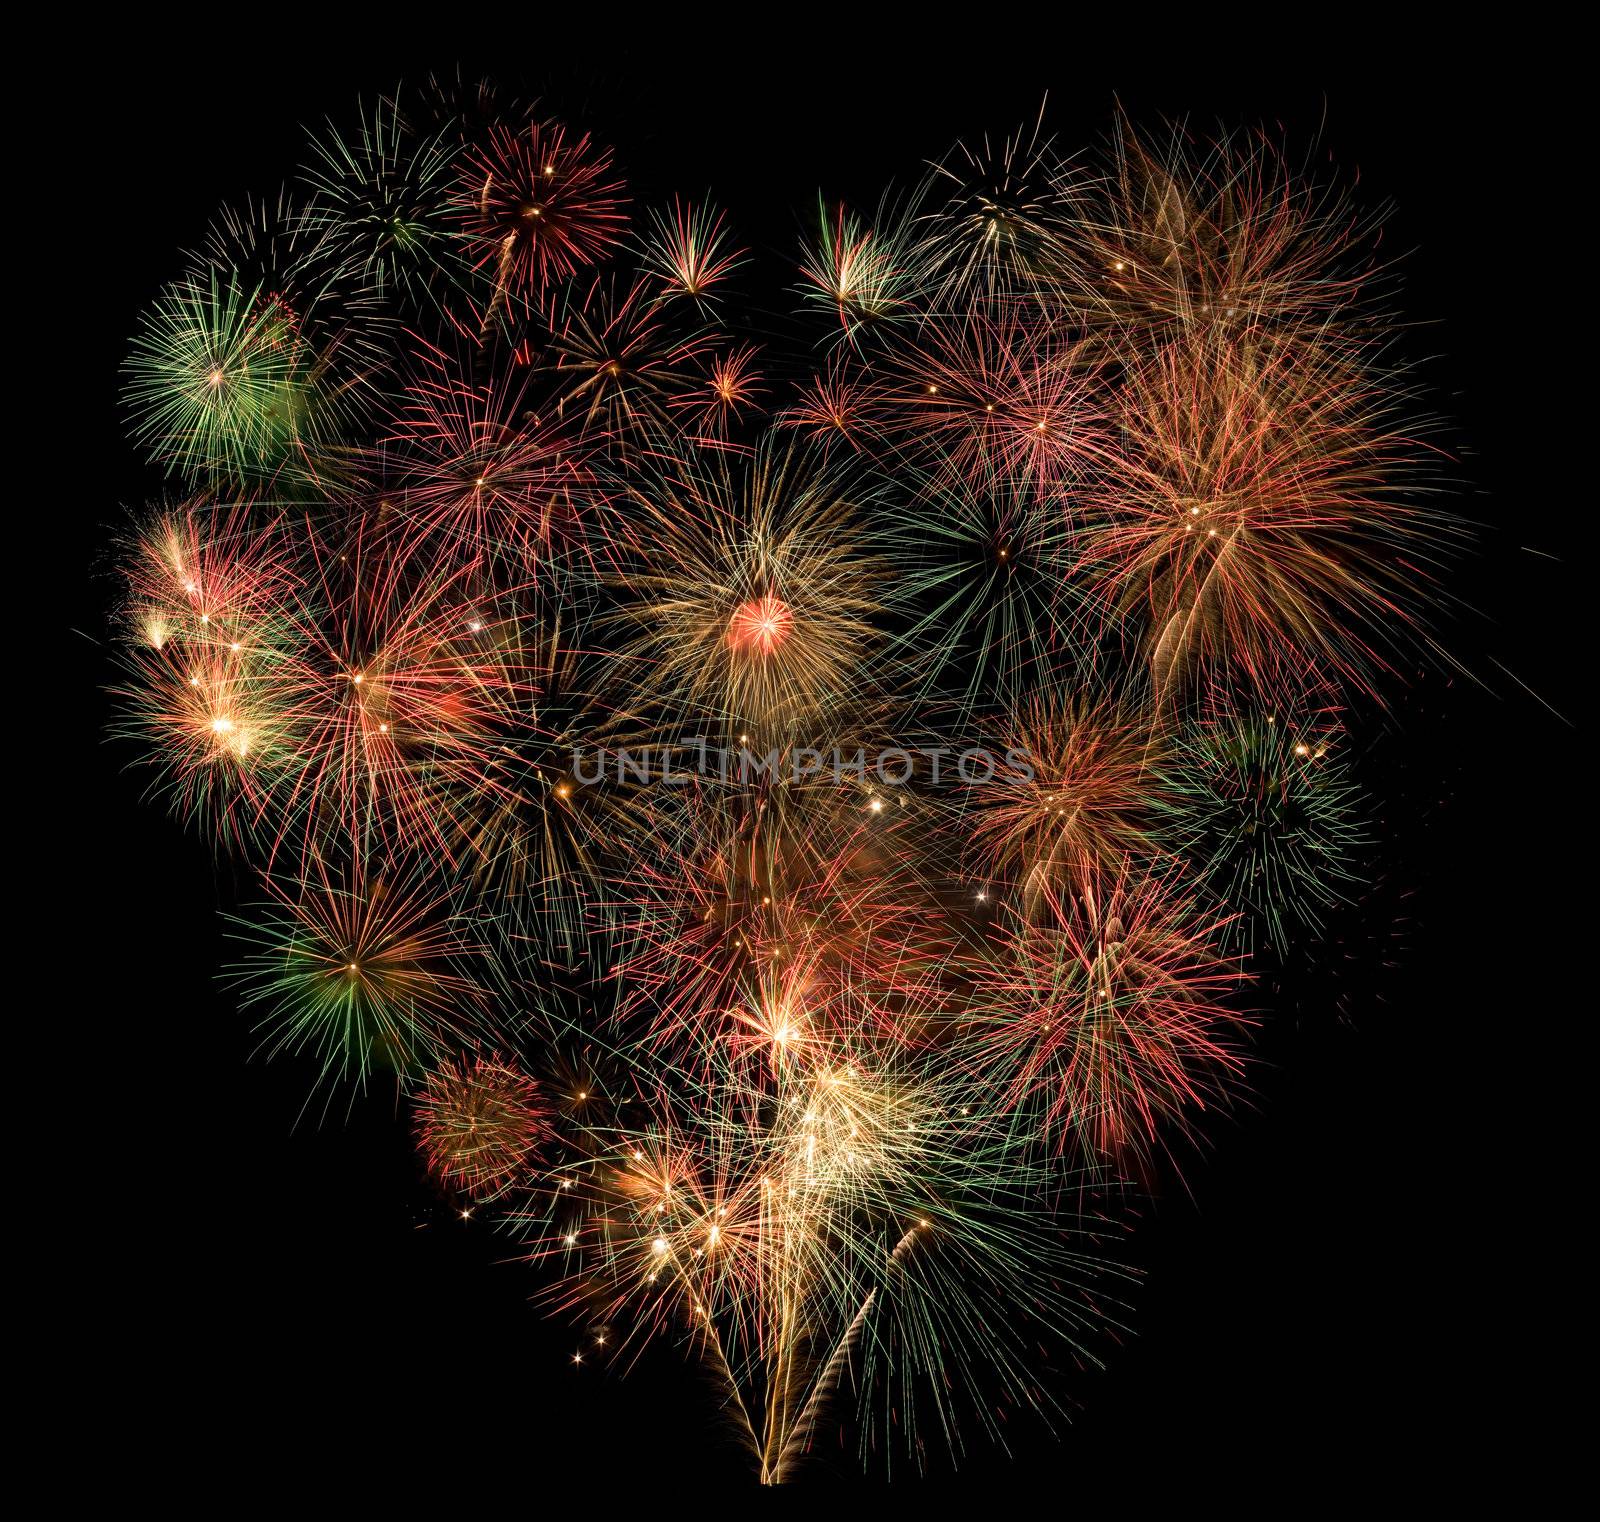 Heart of fireworks on black background.